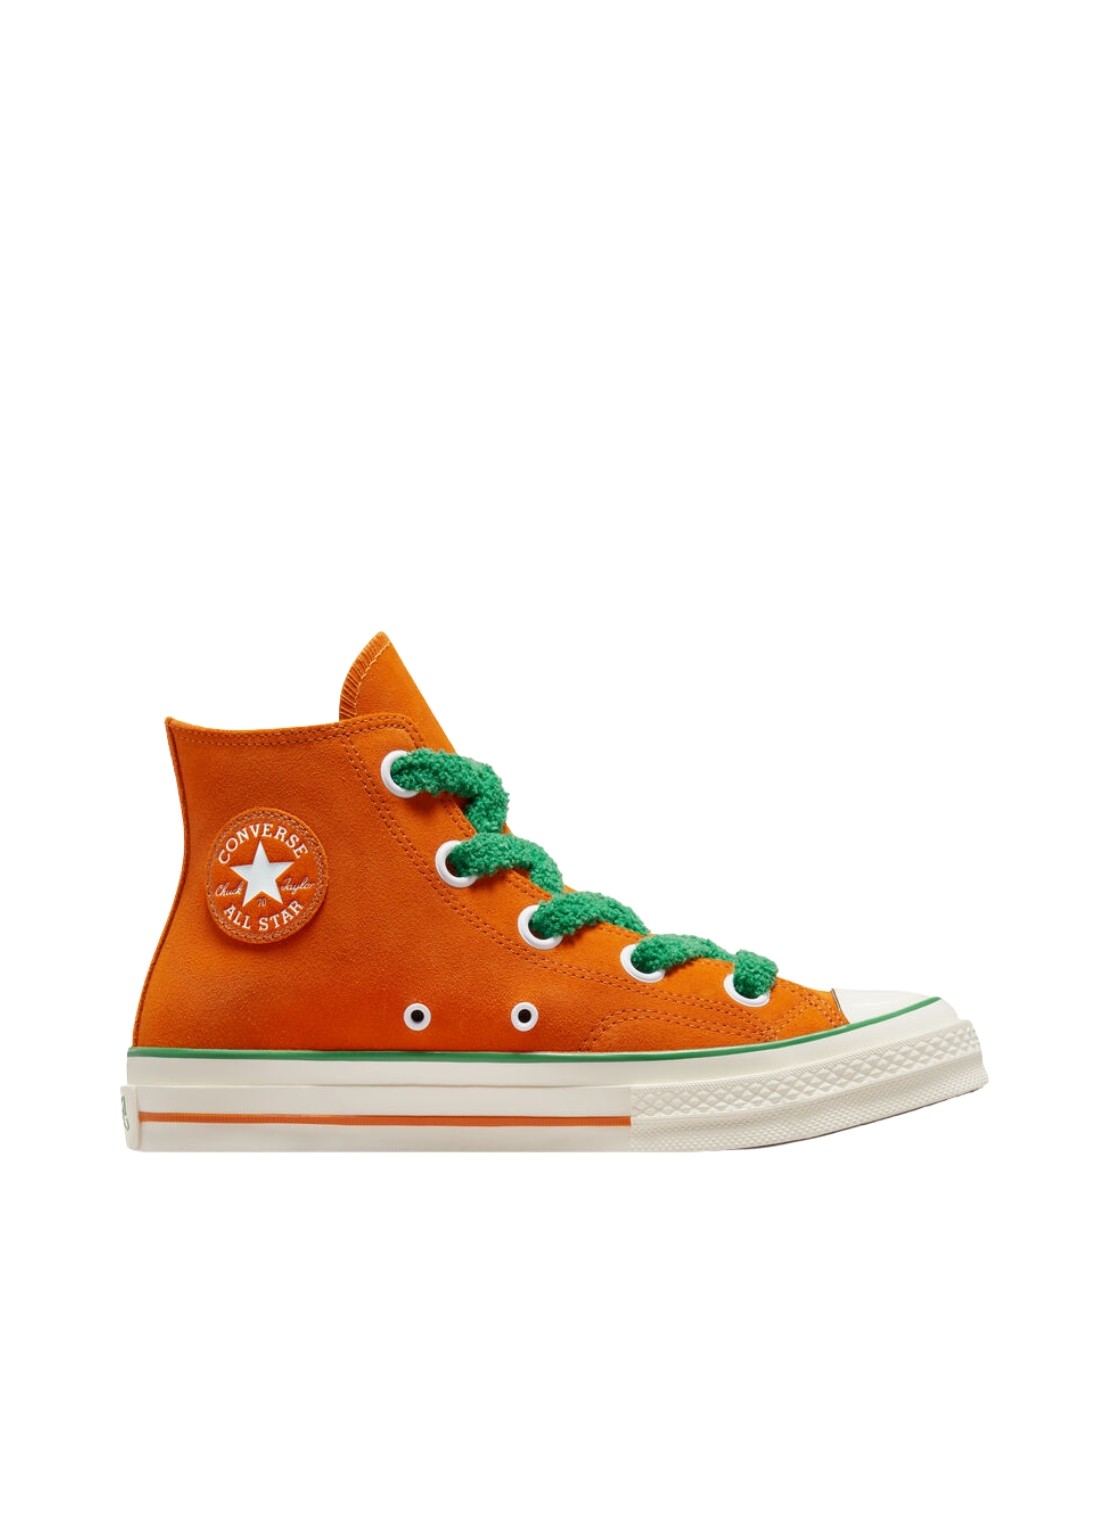 Sneaker converse sneaker woman chuck 70 hi a08152c orange green egret talla naranja
 